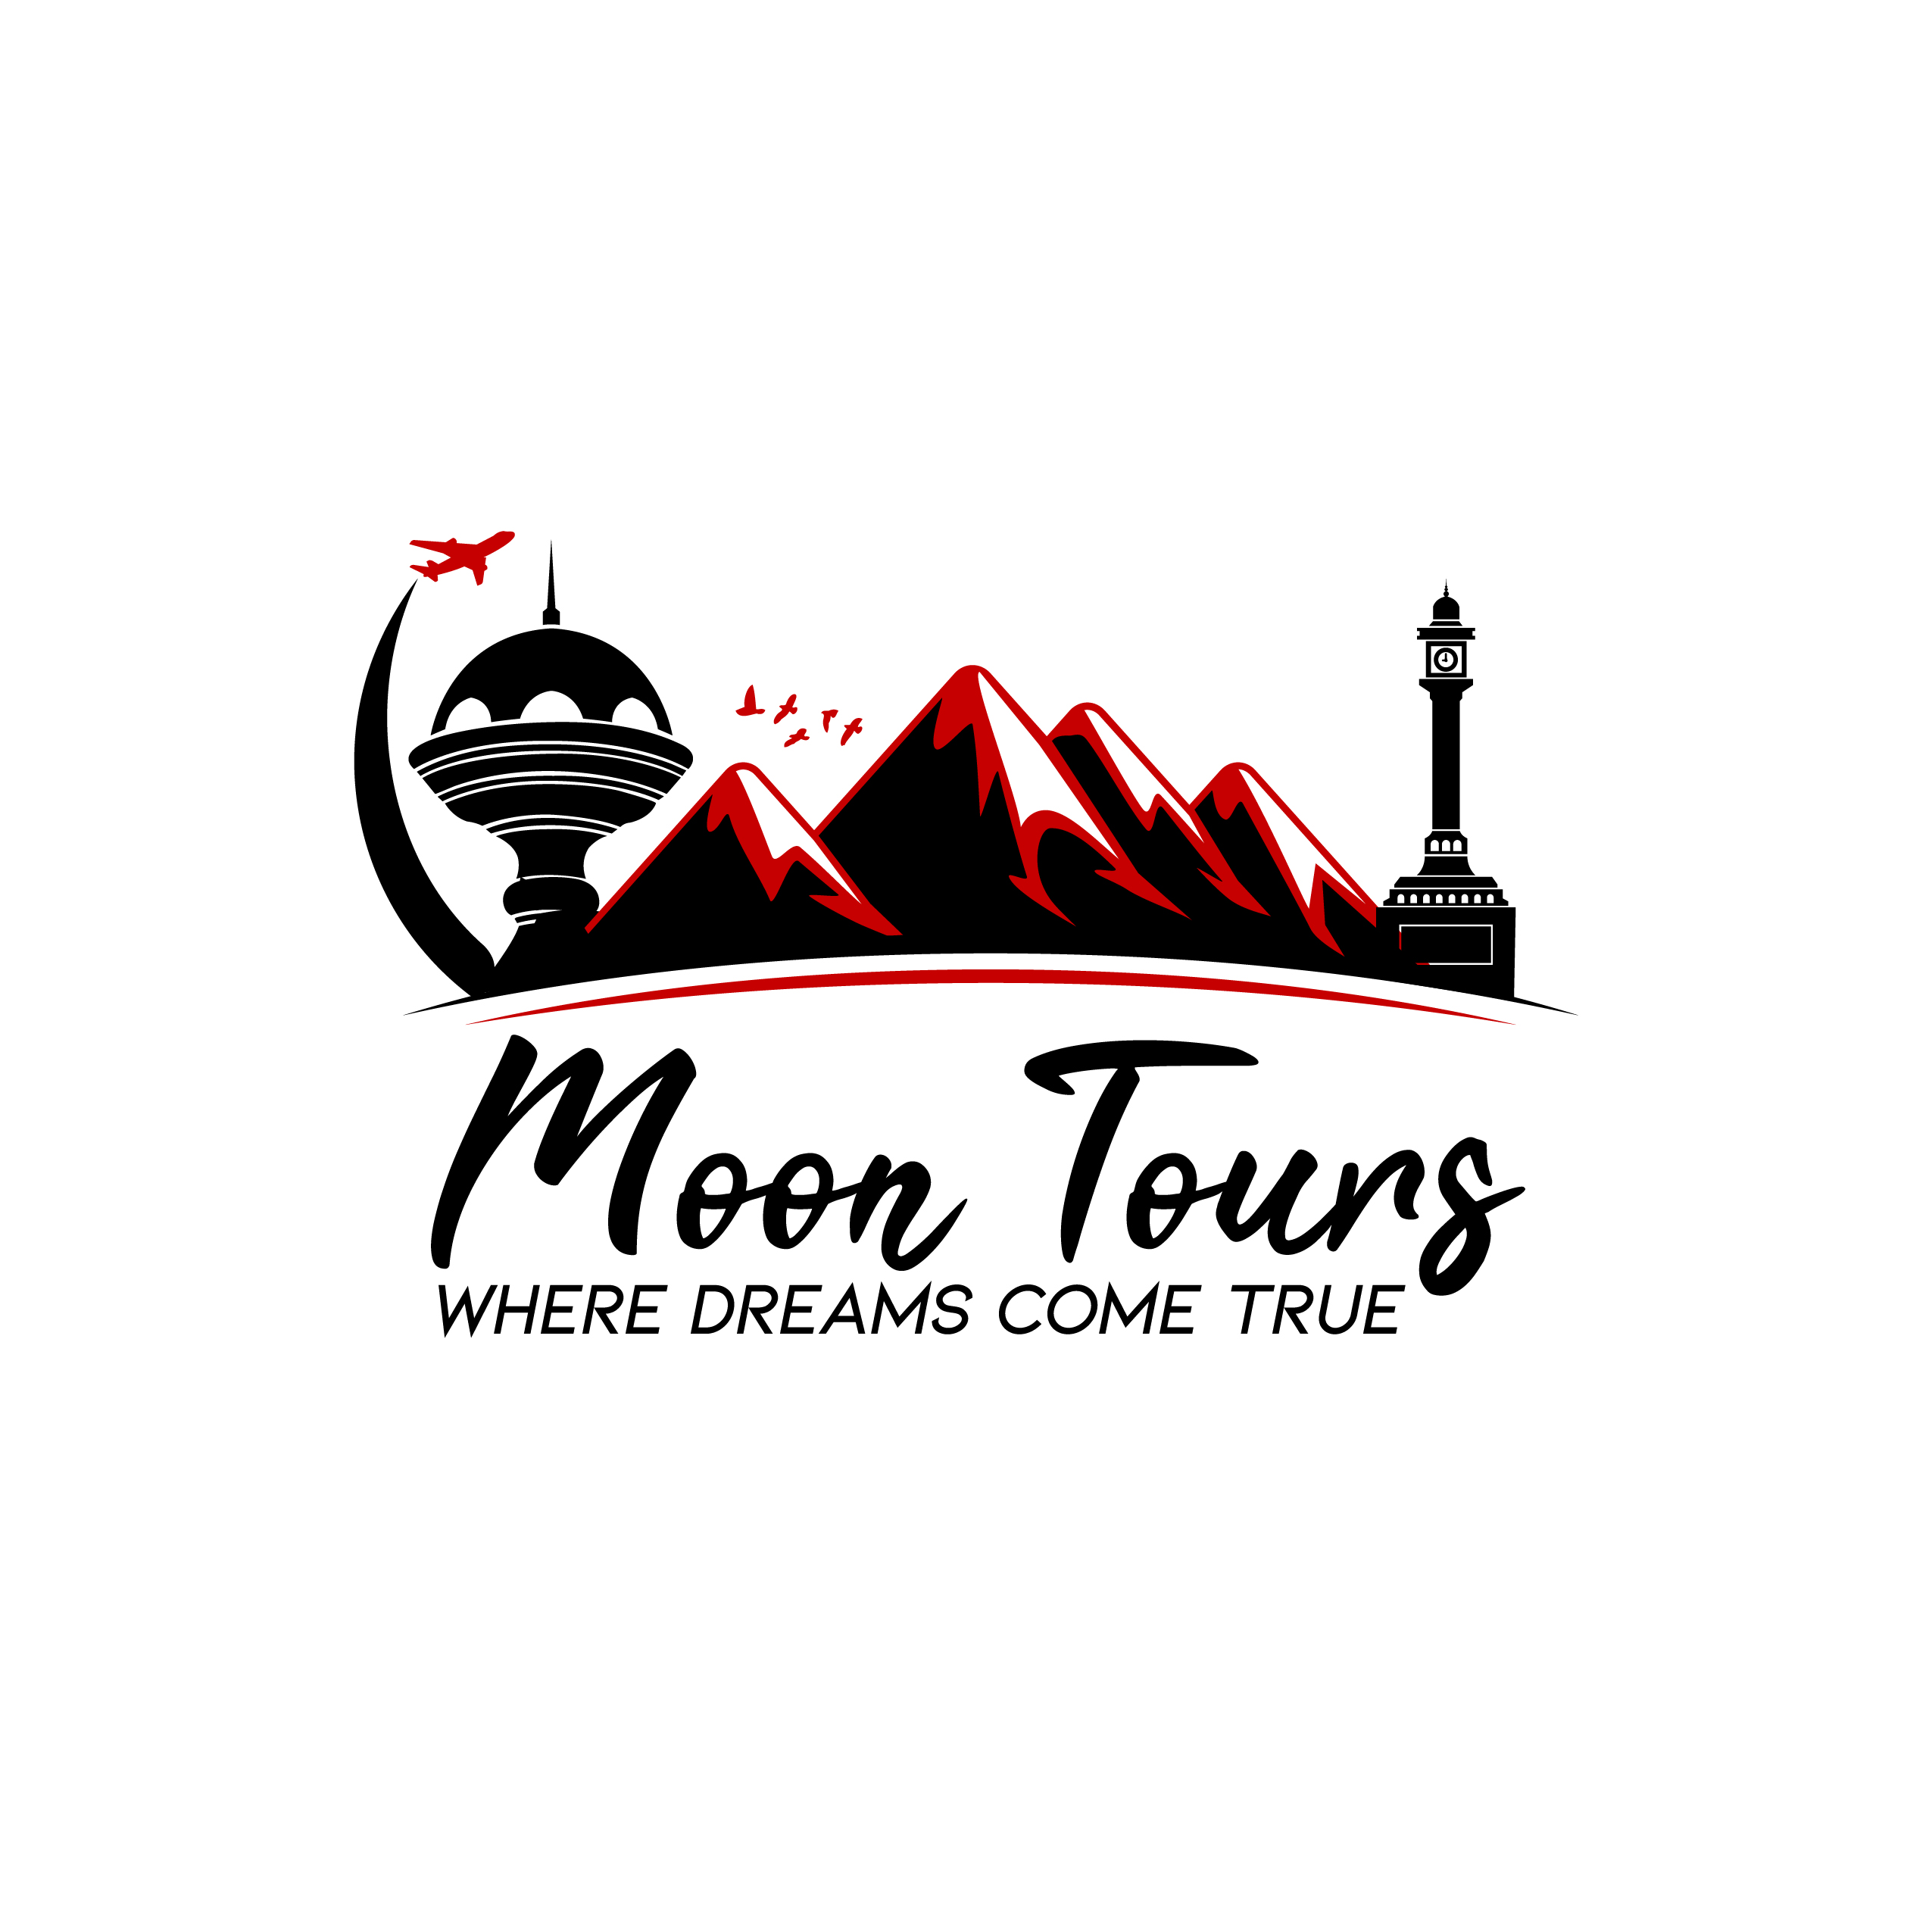 Moon Tours Oman